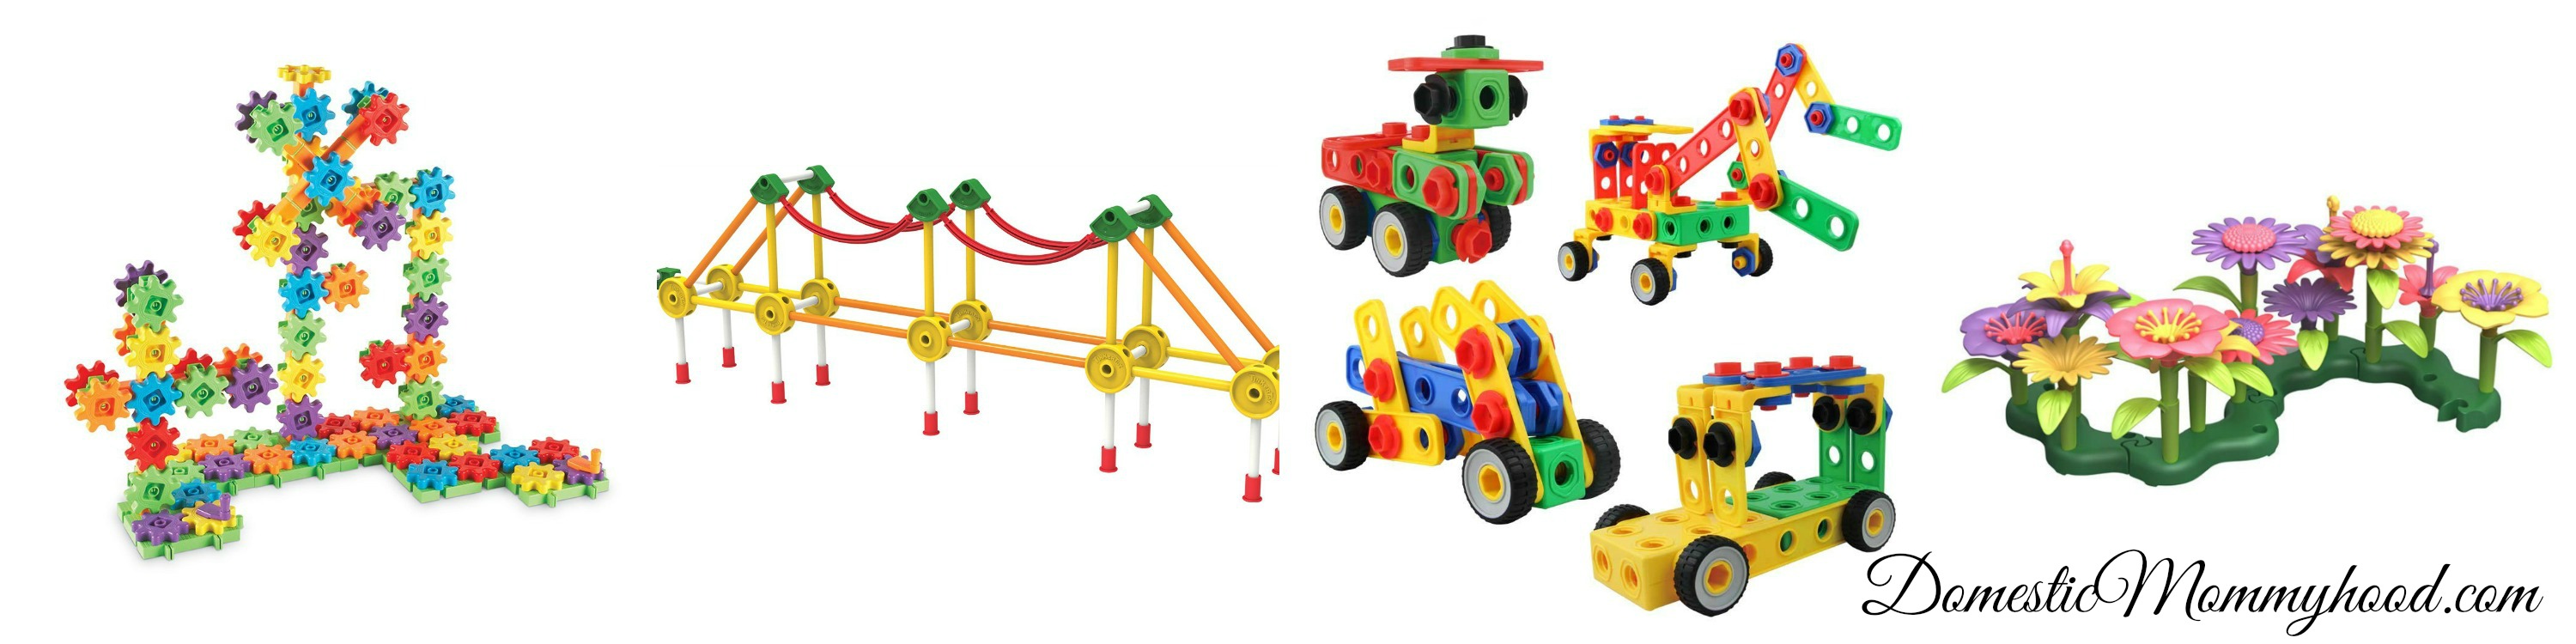 preschool stem toys